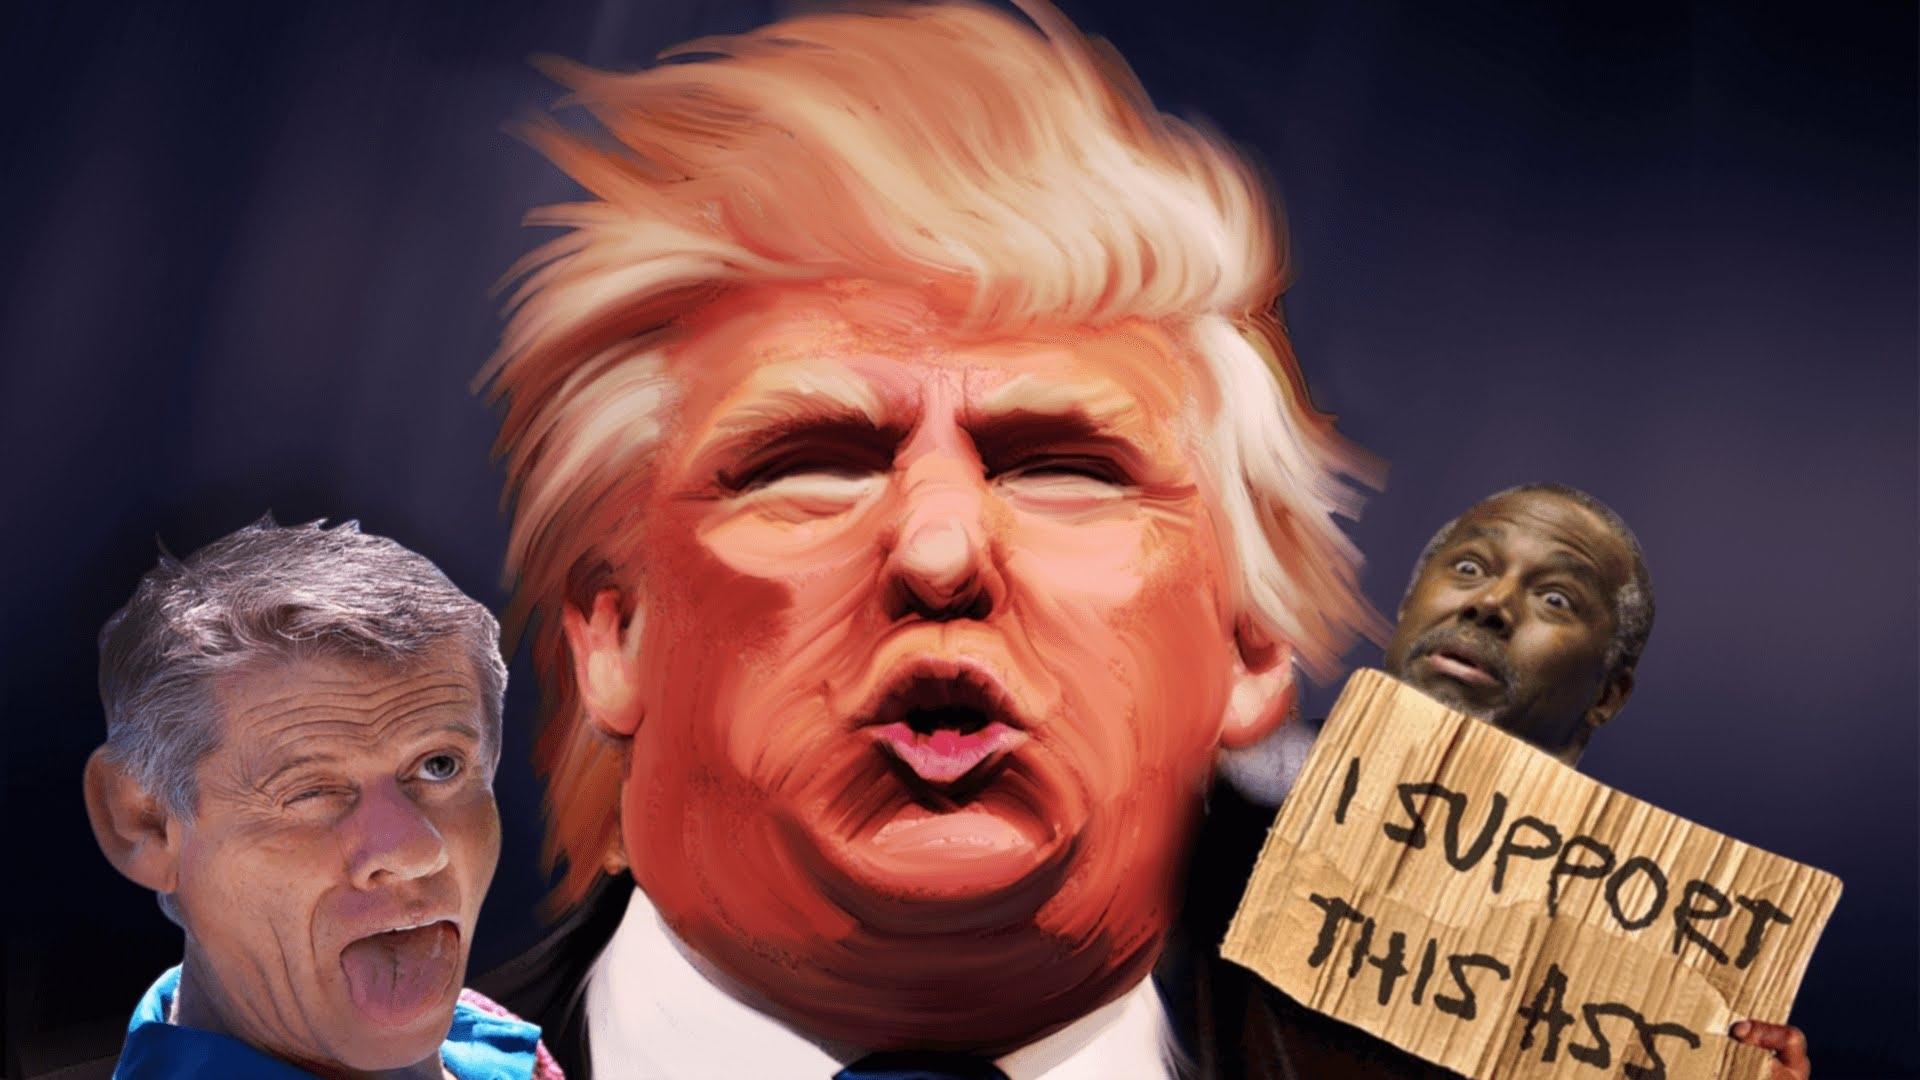 New Donald Trump Wallpaper Funny FULL HD 1080p For PC